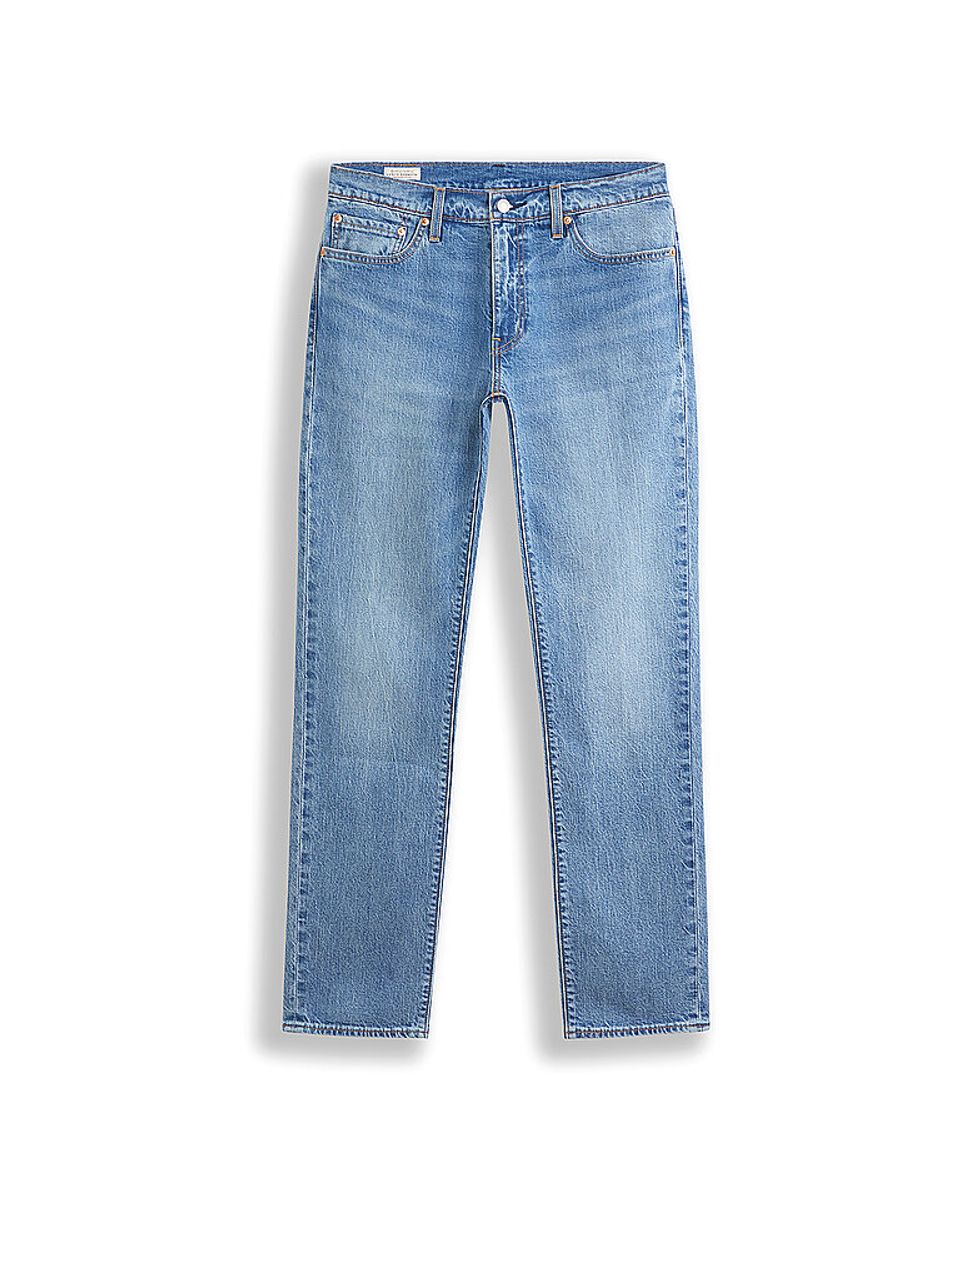 LEVI'S Jeans Slim Fit 511 Stone Horizon blau | 29/L34